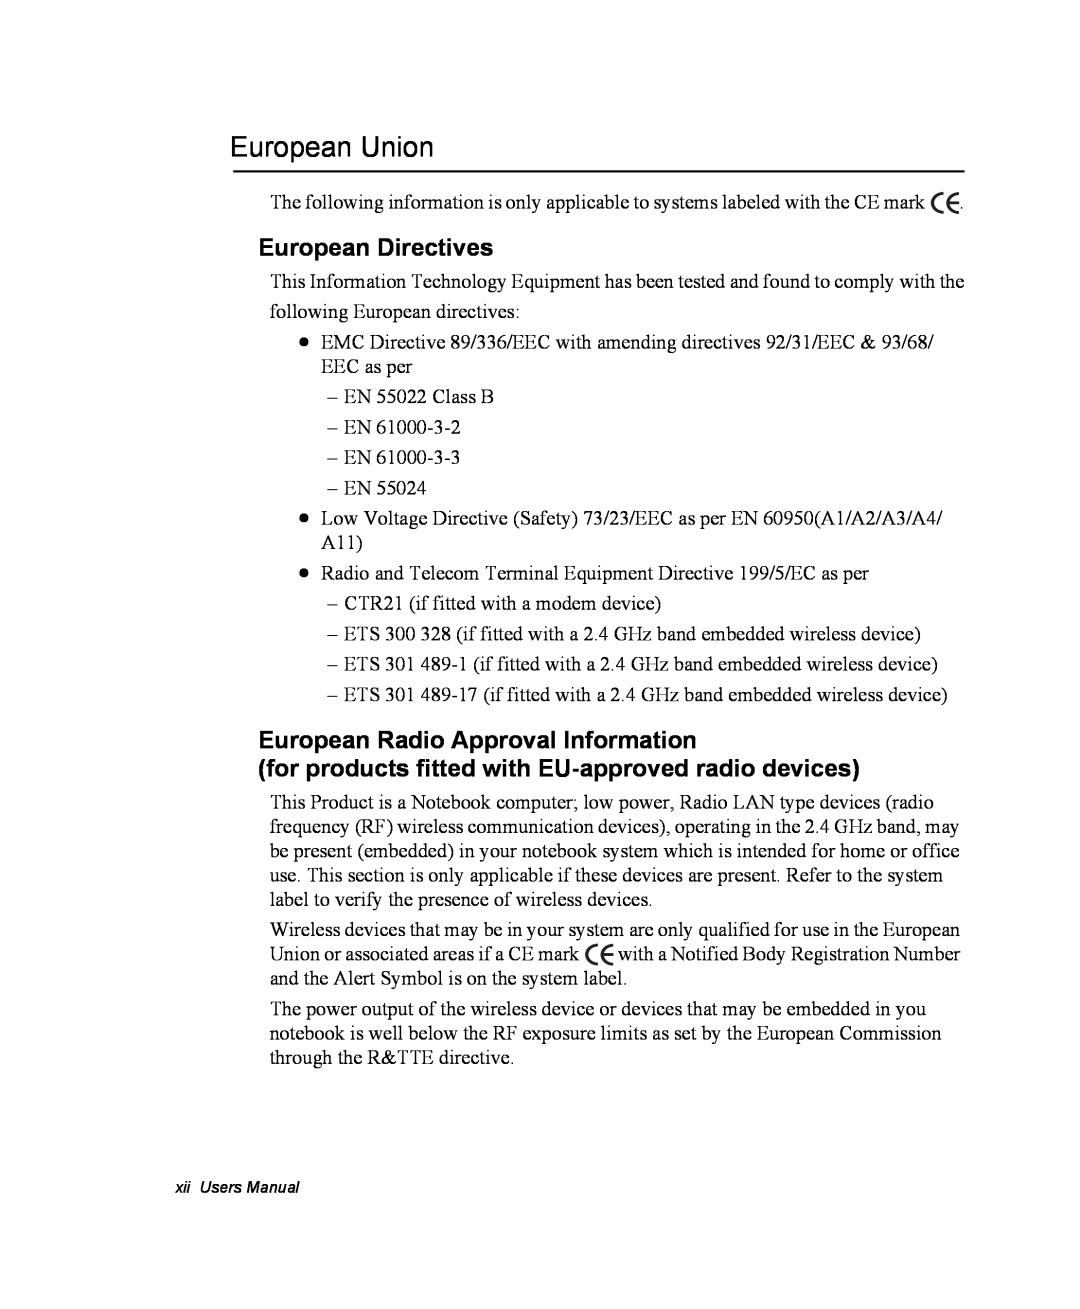 Samsung NM40PRCV02/SEF, NM40PRDV02/SEF manual European Union, European Directives, European Radio Approval Information 